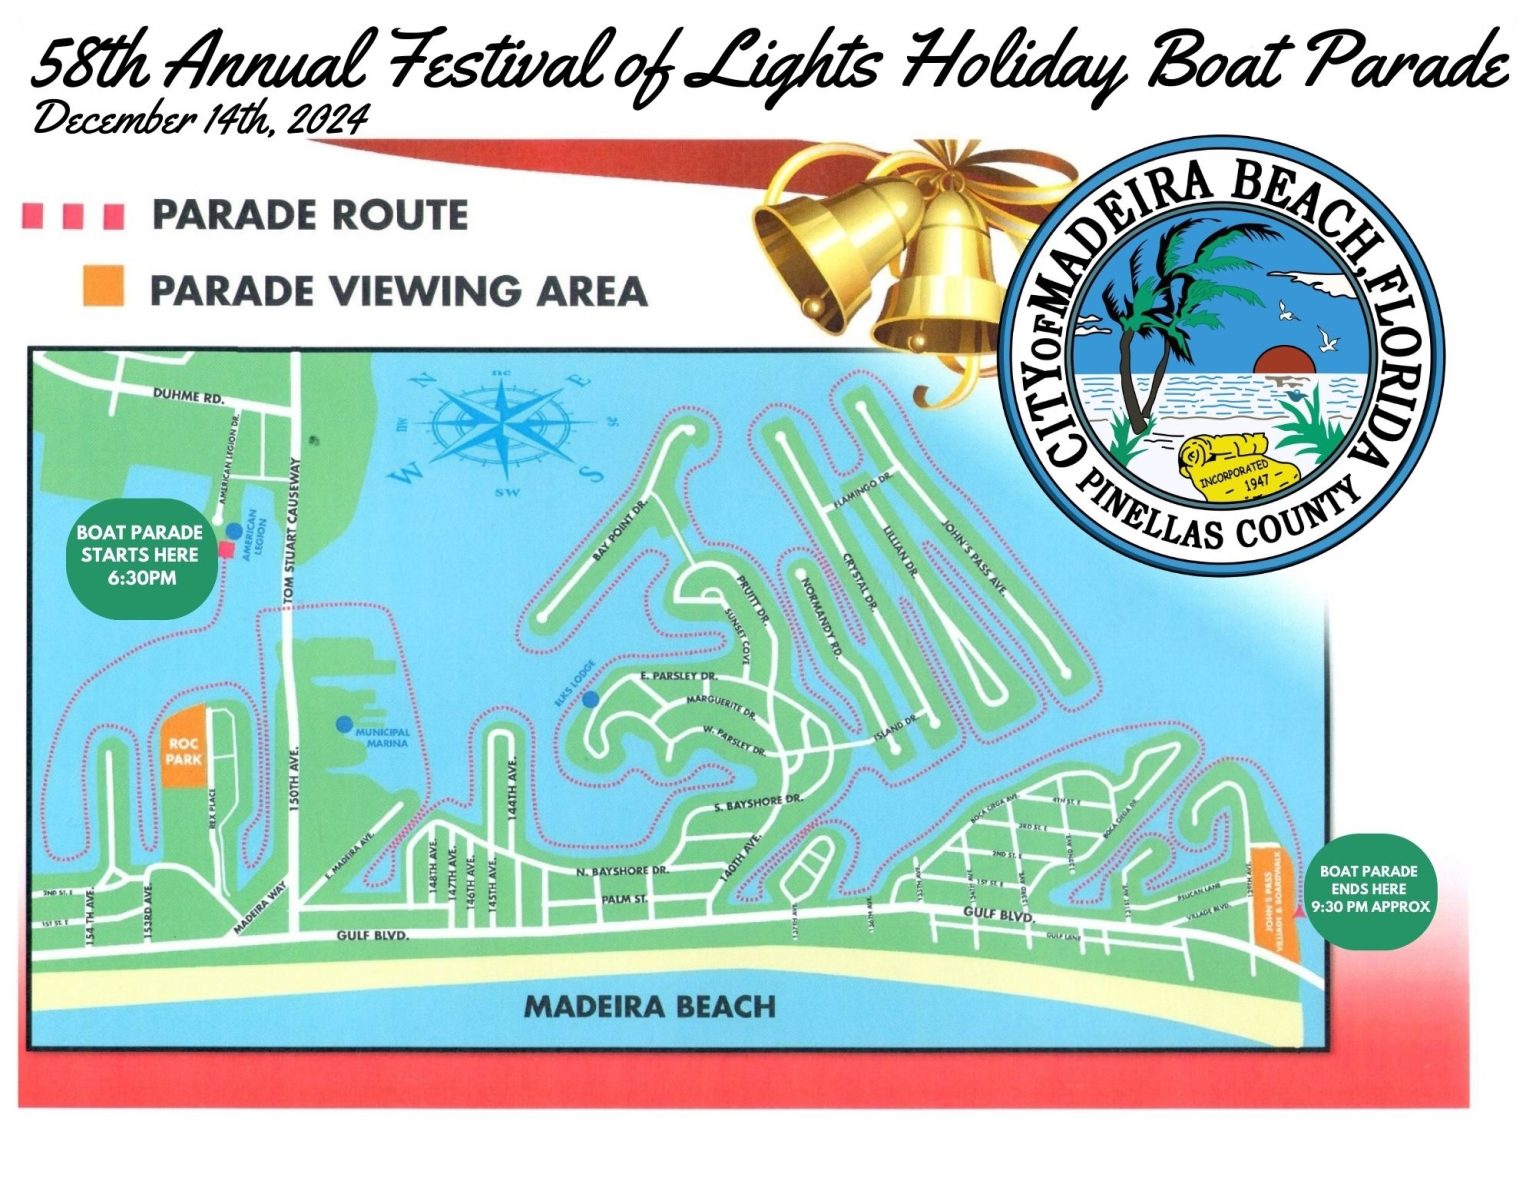 Festival of Lights Holiday Boat Parade Madeira Beach, FL